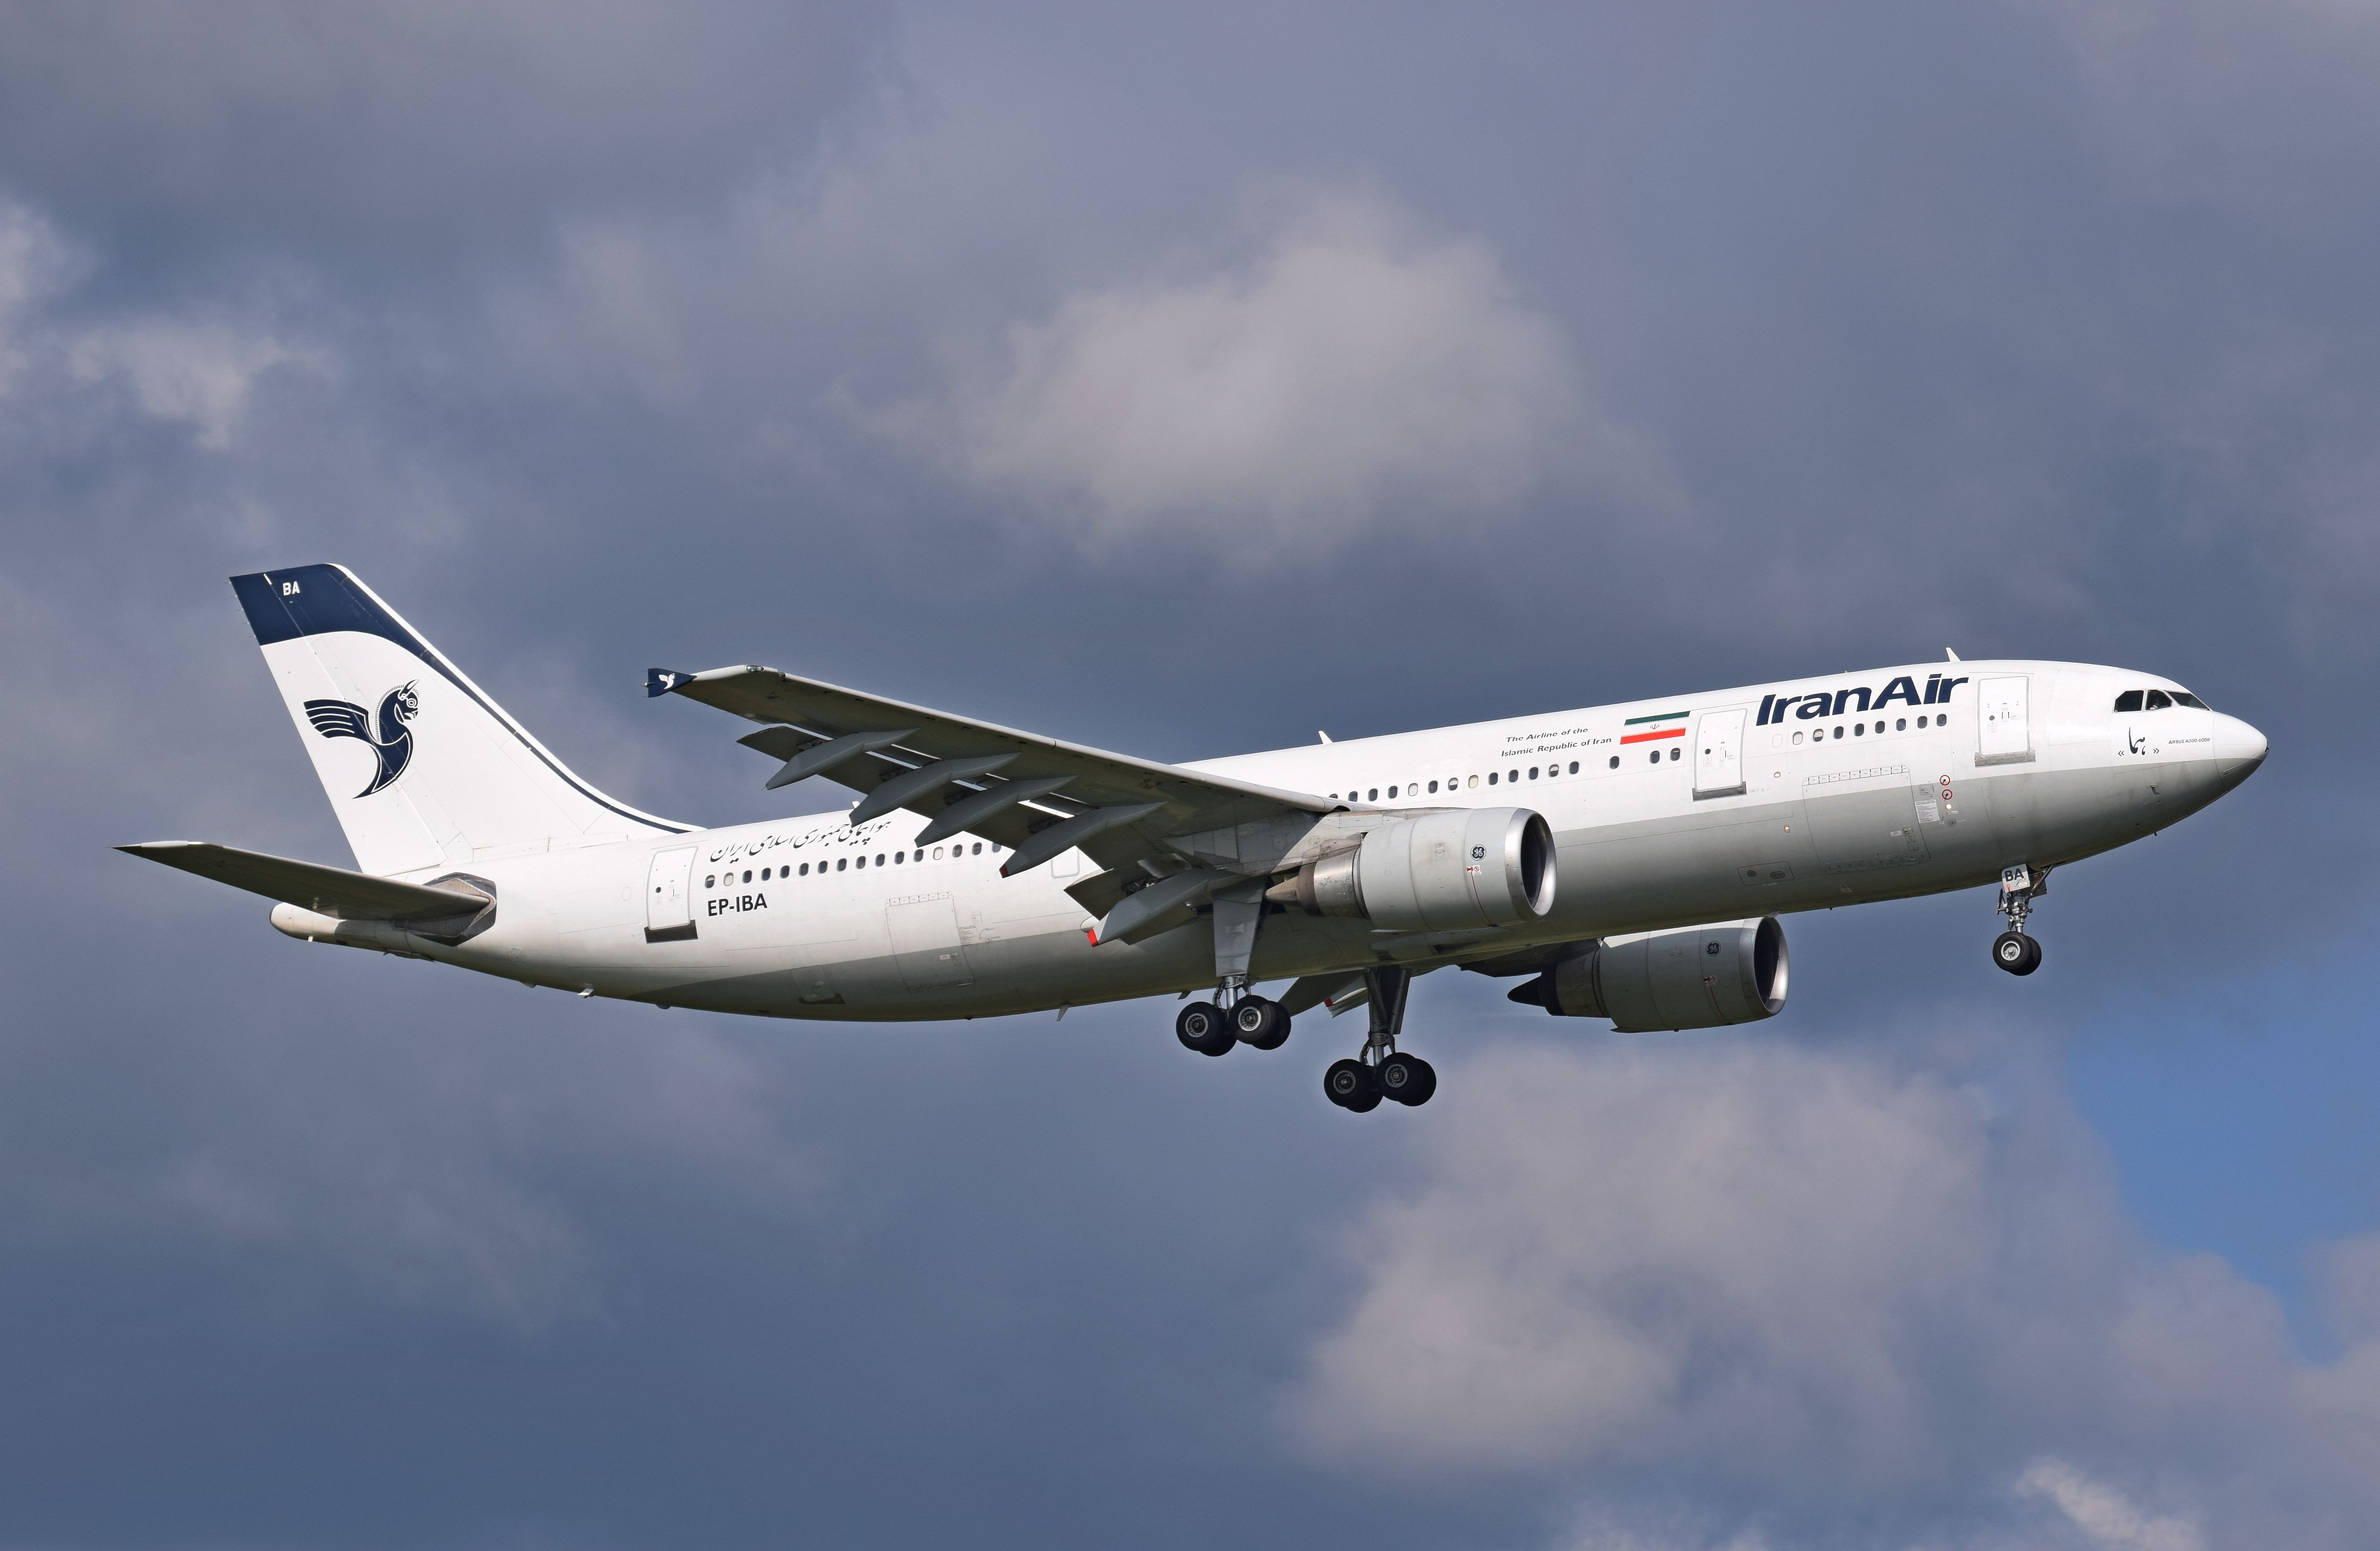 Iran_Air_Airbus_A300_(EP-IBA)_arrives_London_Heathrow_Airport_21September2014_arp